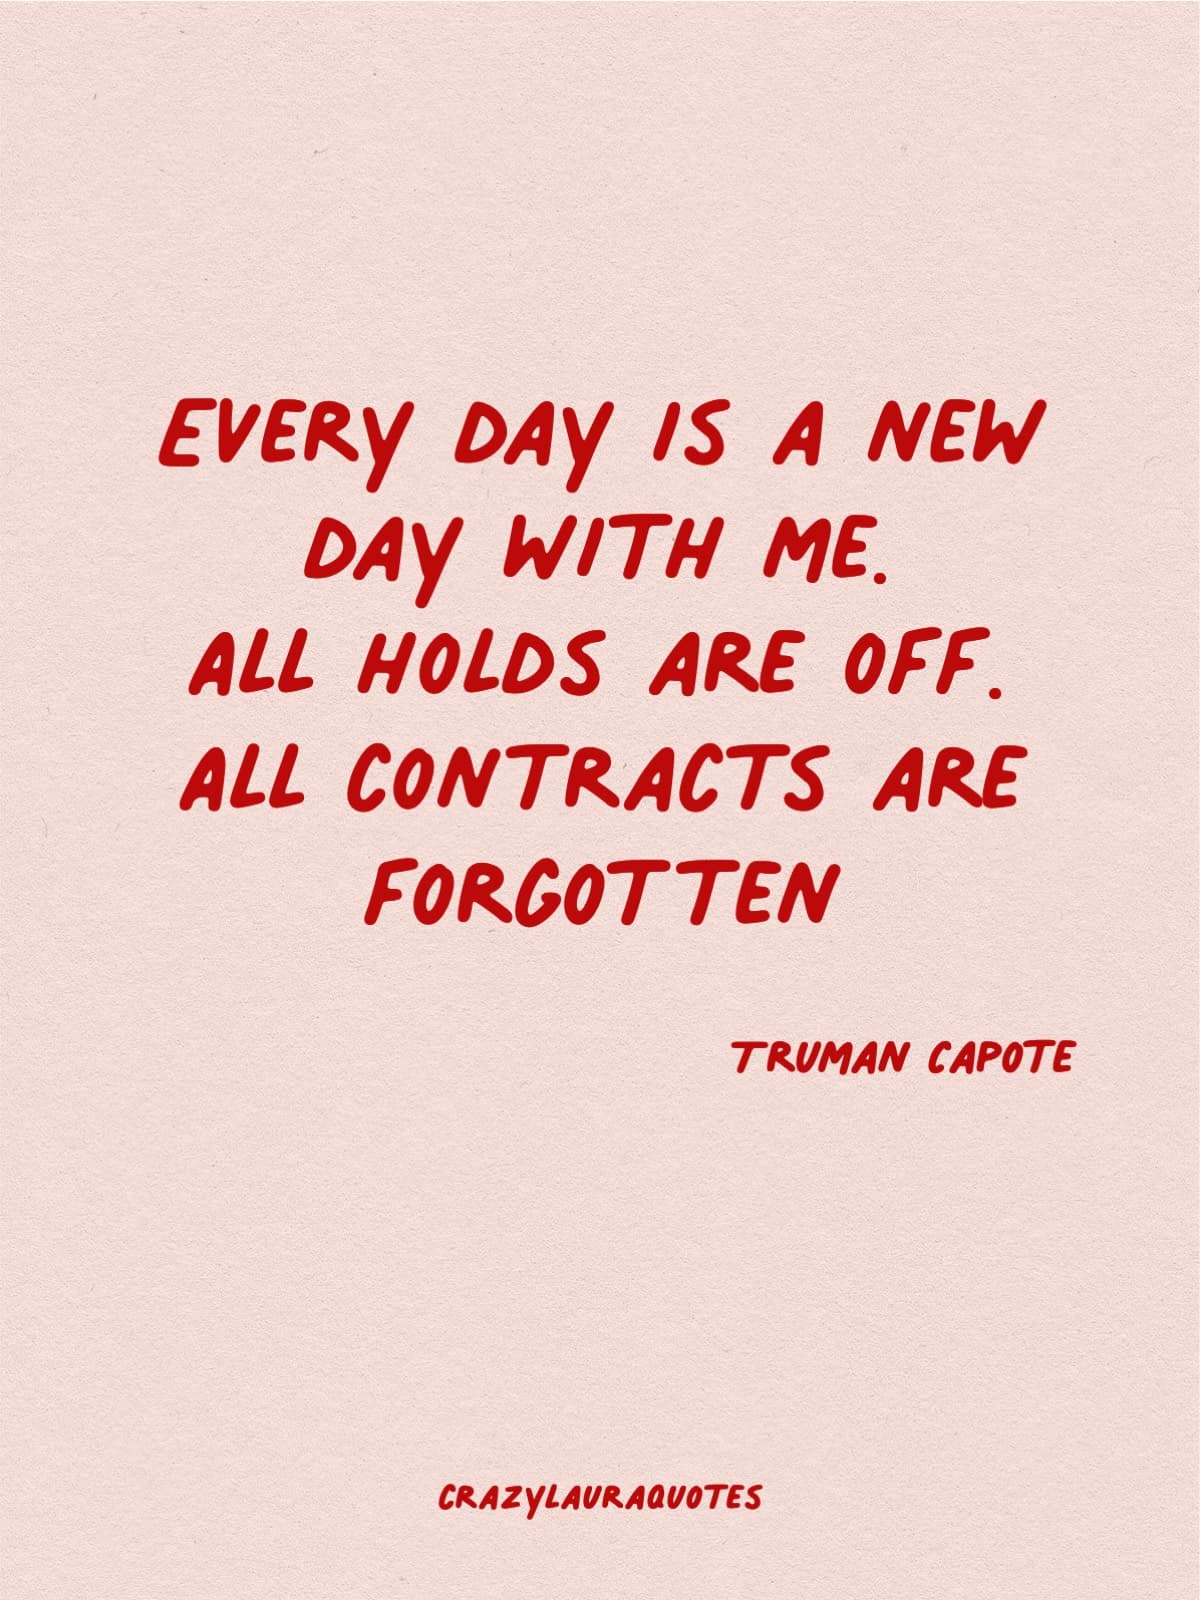 start each day fresh quote